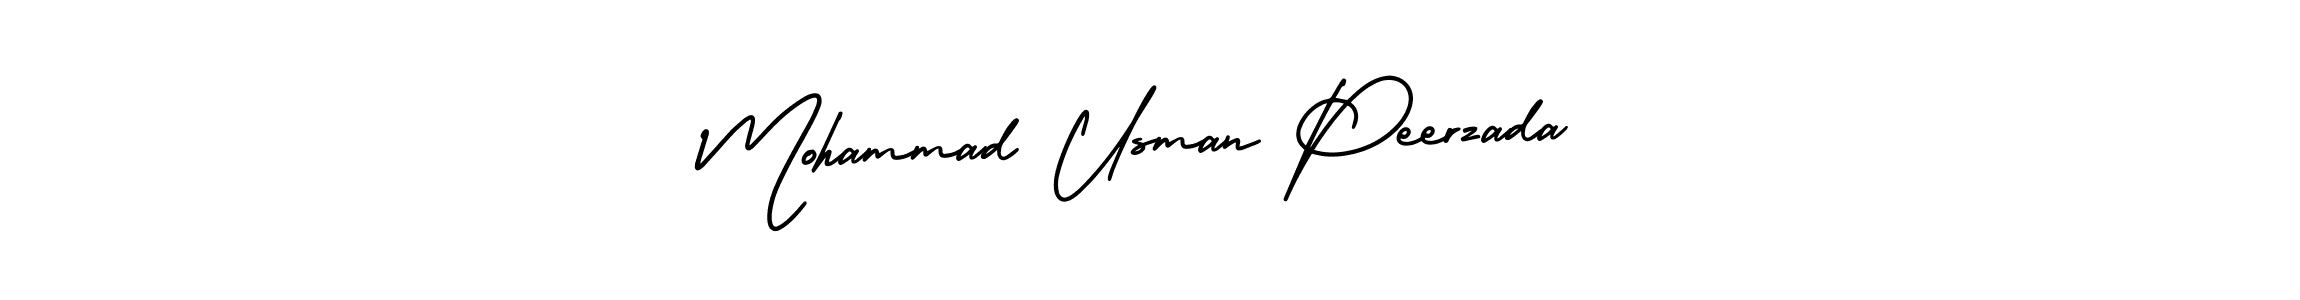 Best and Professional Signature Style for Mohammad Usman Peerzada. AmerikaSignatureDemo-Regular Best Signature Style Collection. Mohammad Usman Peerzada signature style 3 images and pictures png